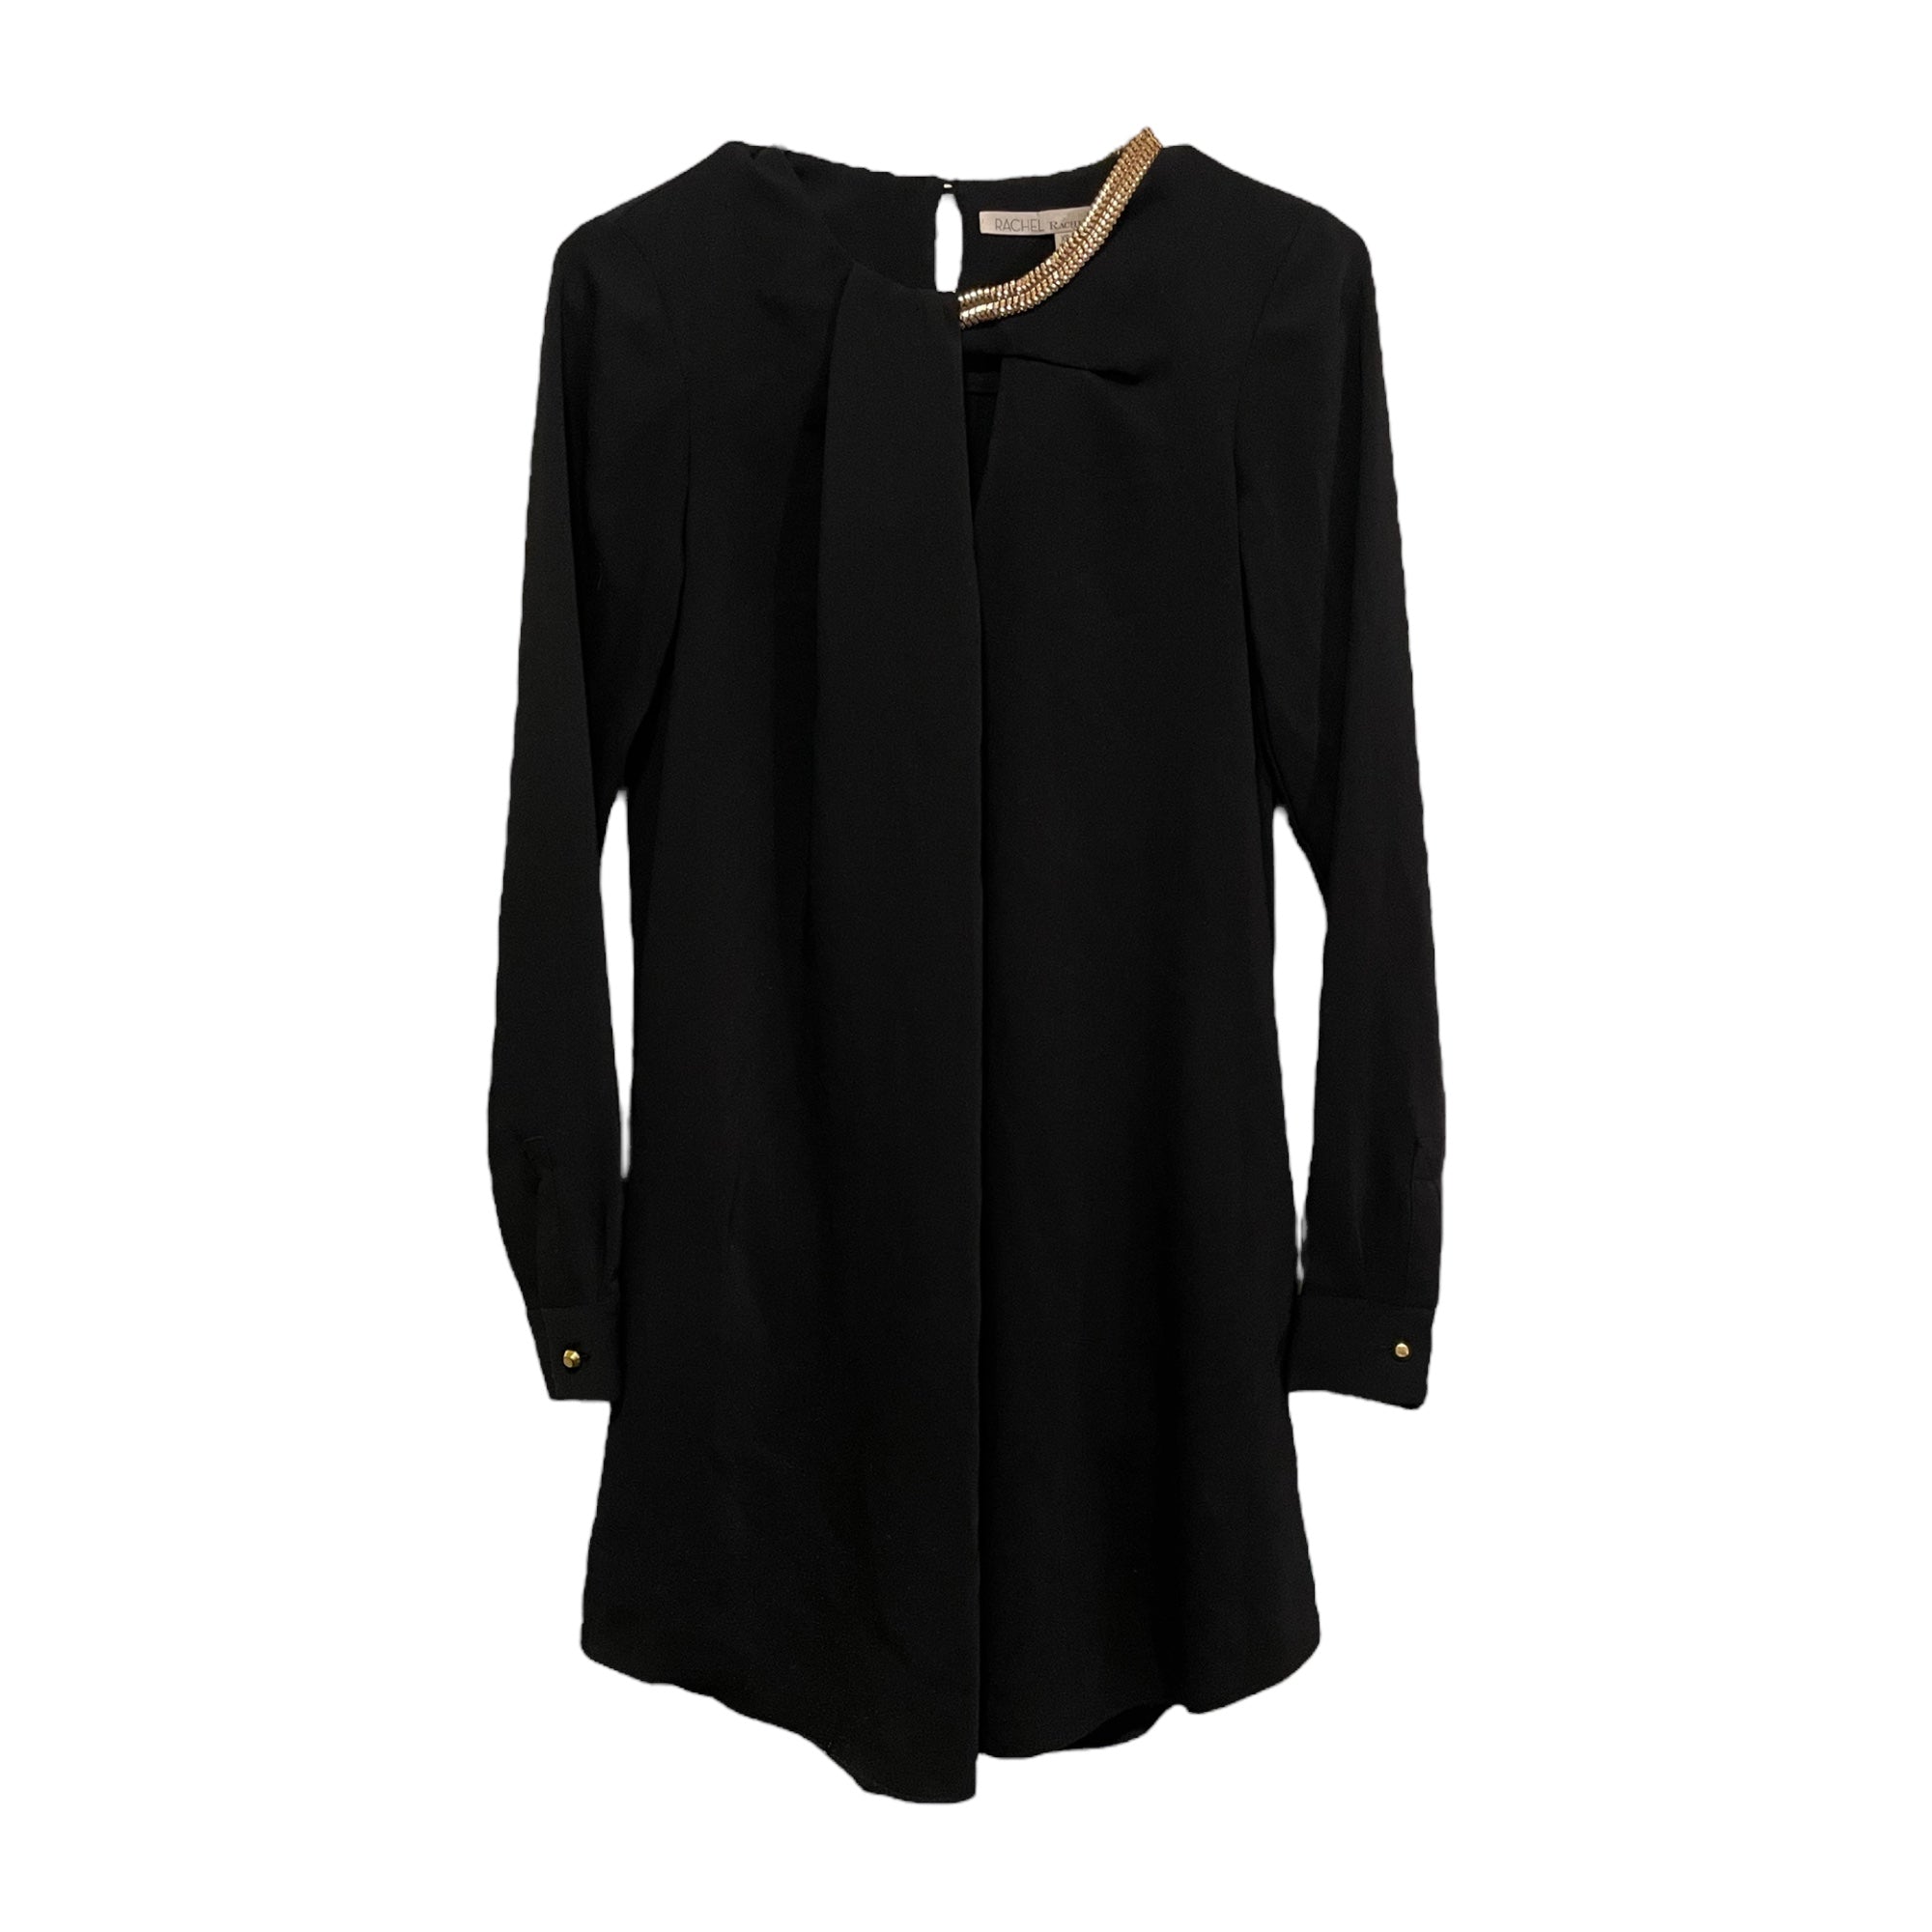 RACHEL Rachel Roy Black Long Sleeve Dress/Top with Gold Neckline Accent & Pockets |Size:XS|